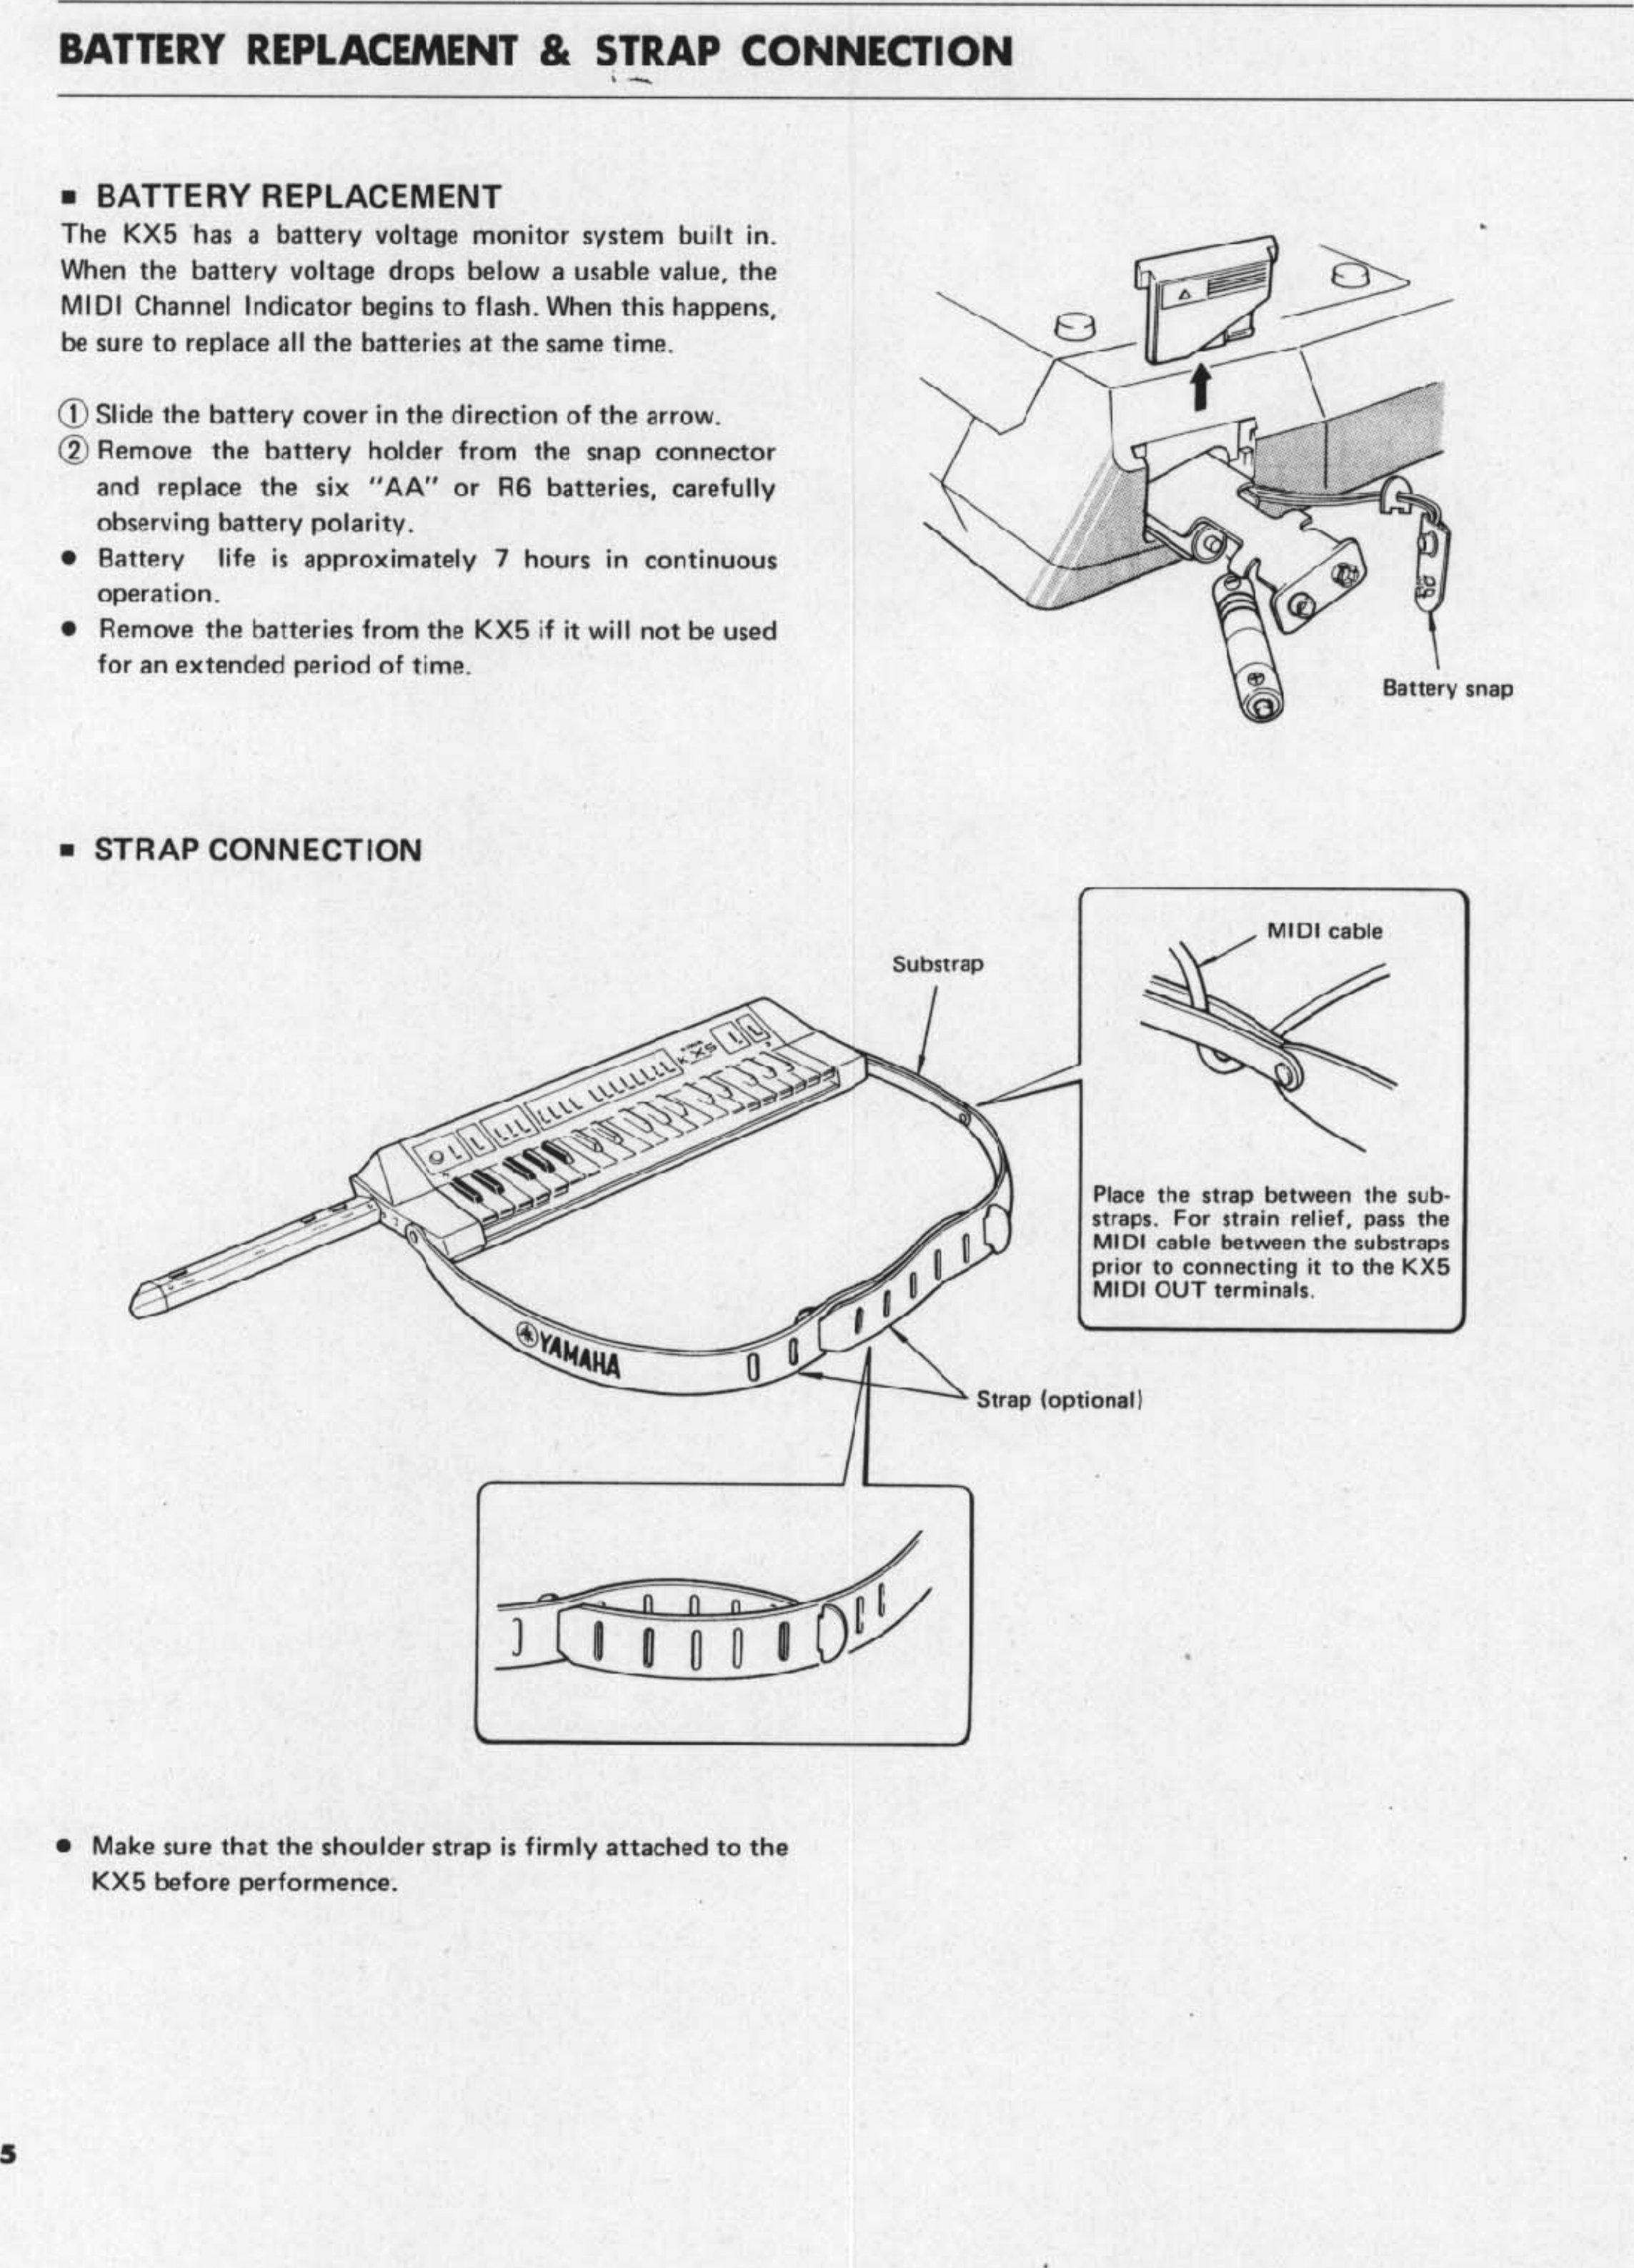 Page 6 of 8 - Yamaha  KX5 Owner's Manual (Image) KX5E